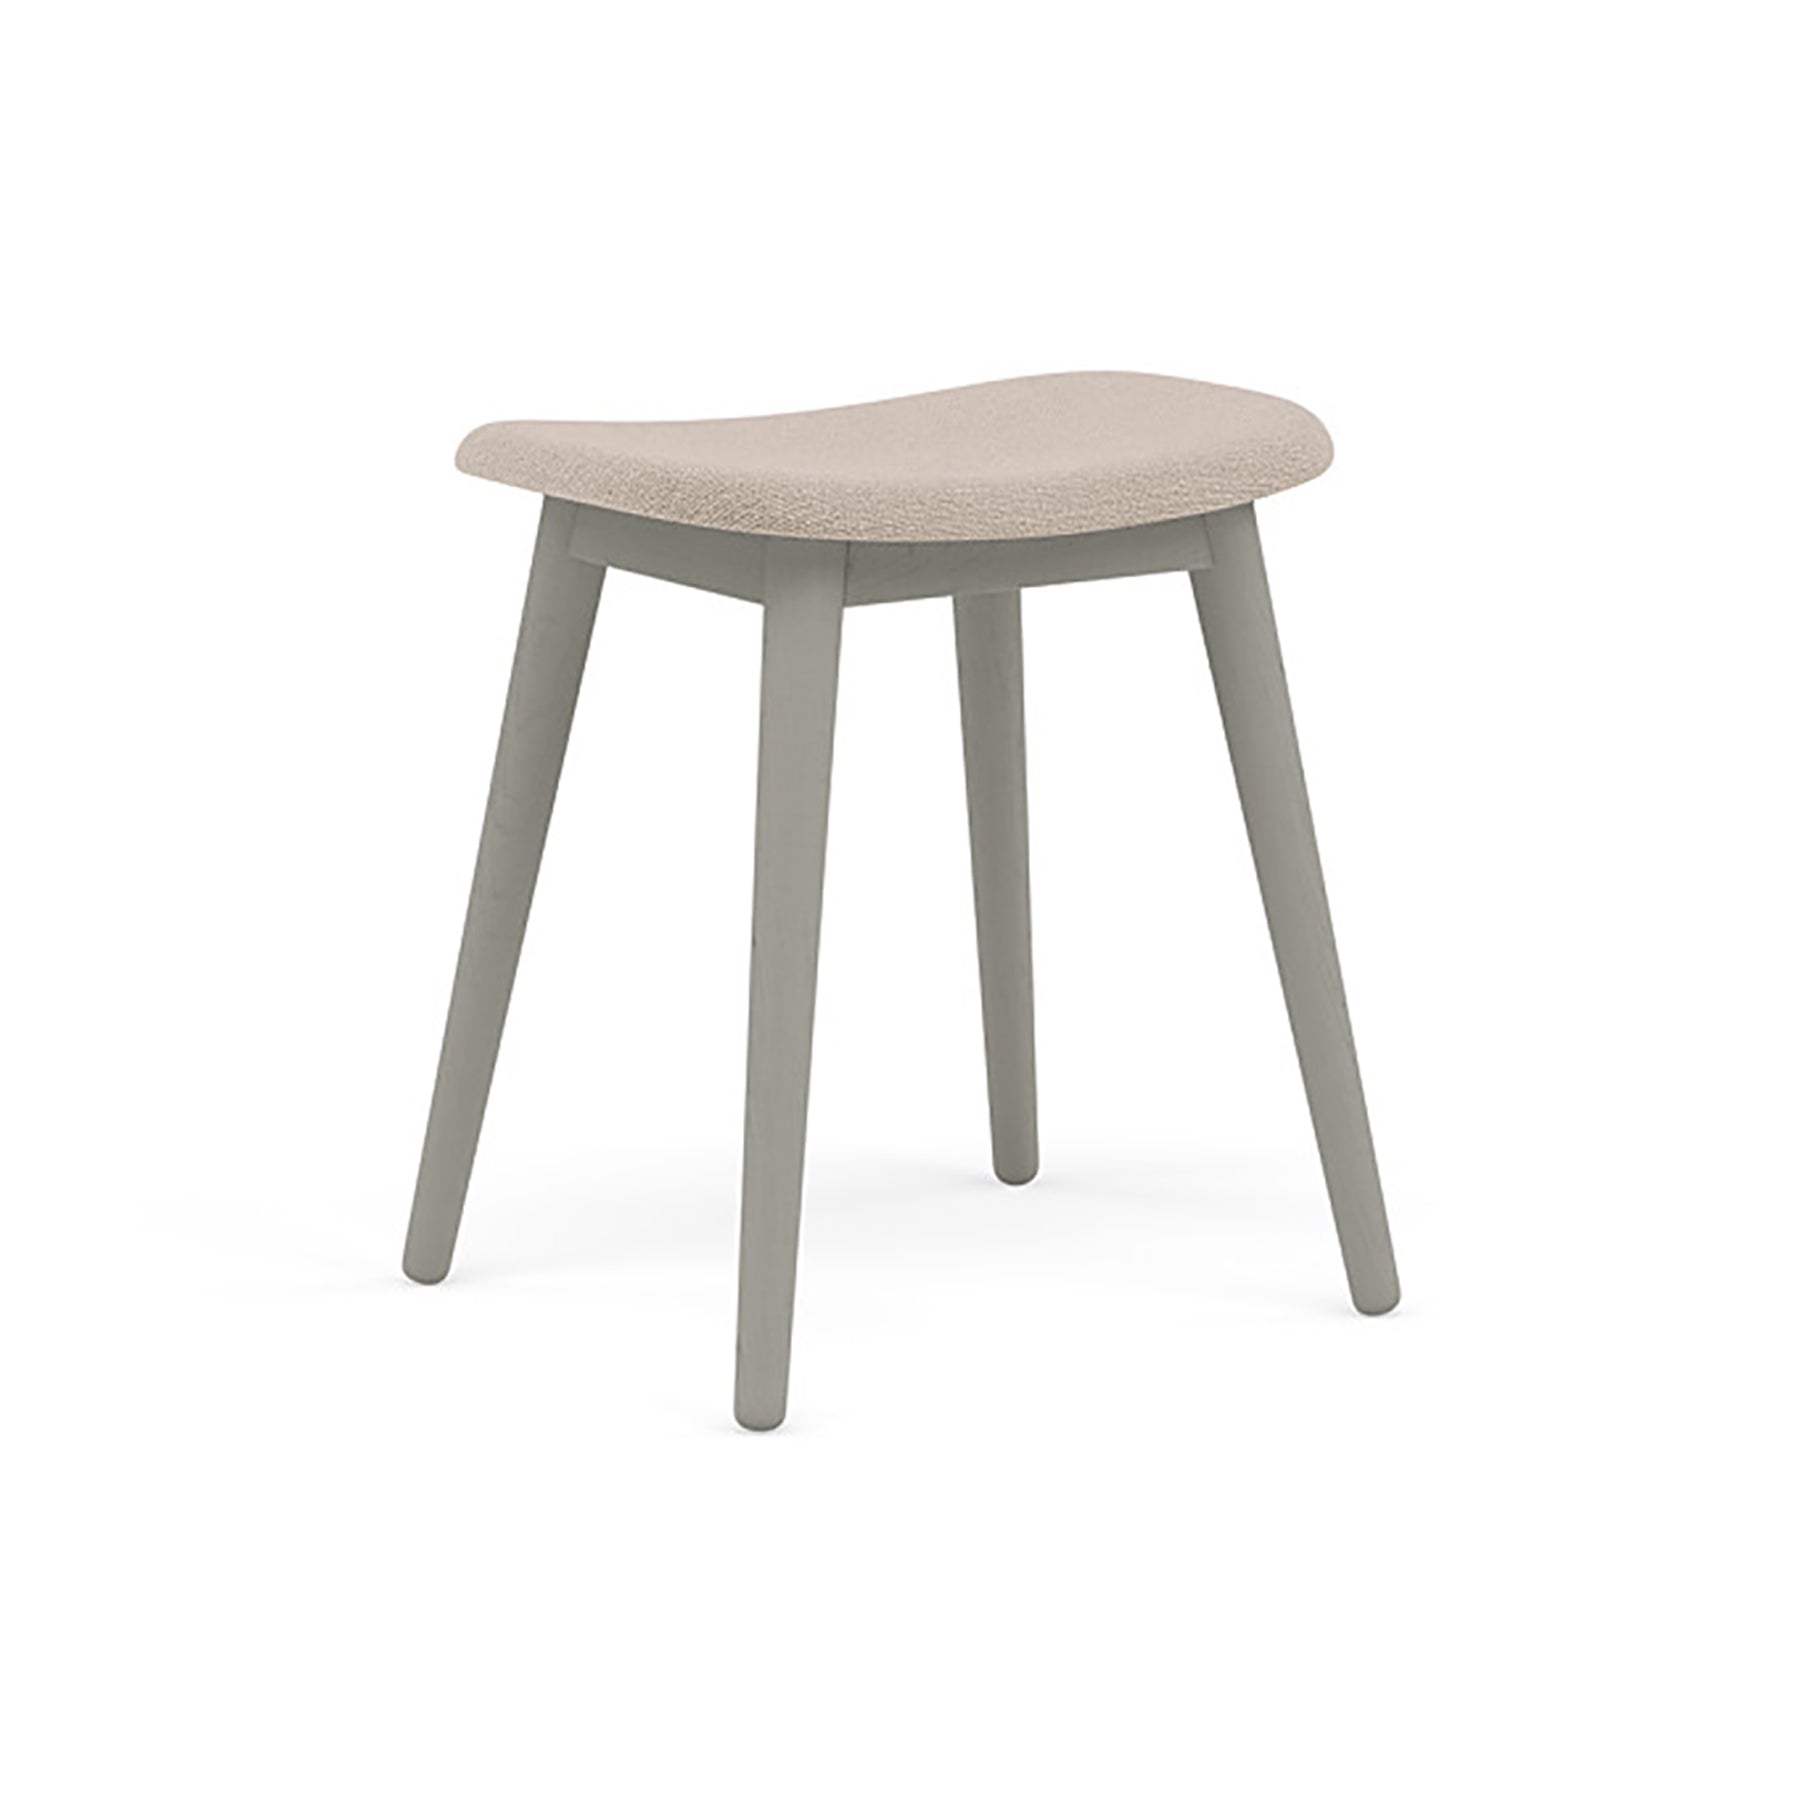 Fiber Stool: Wood Base + Upholstered + Grey